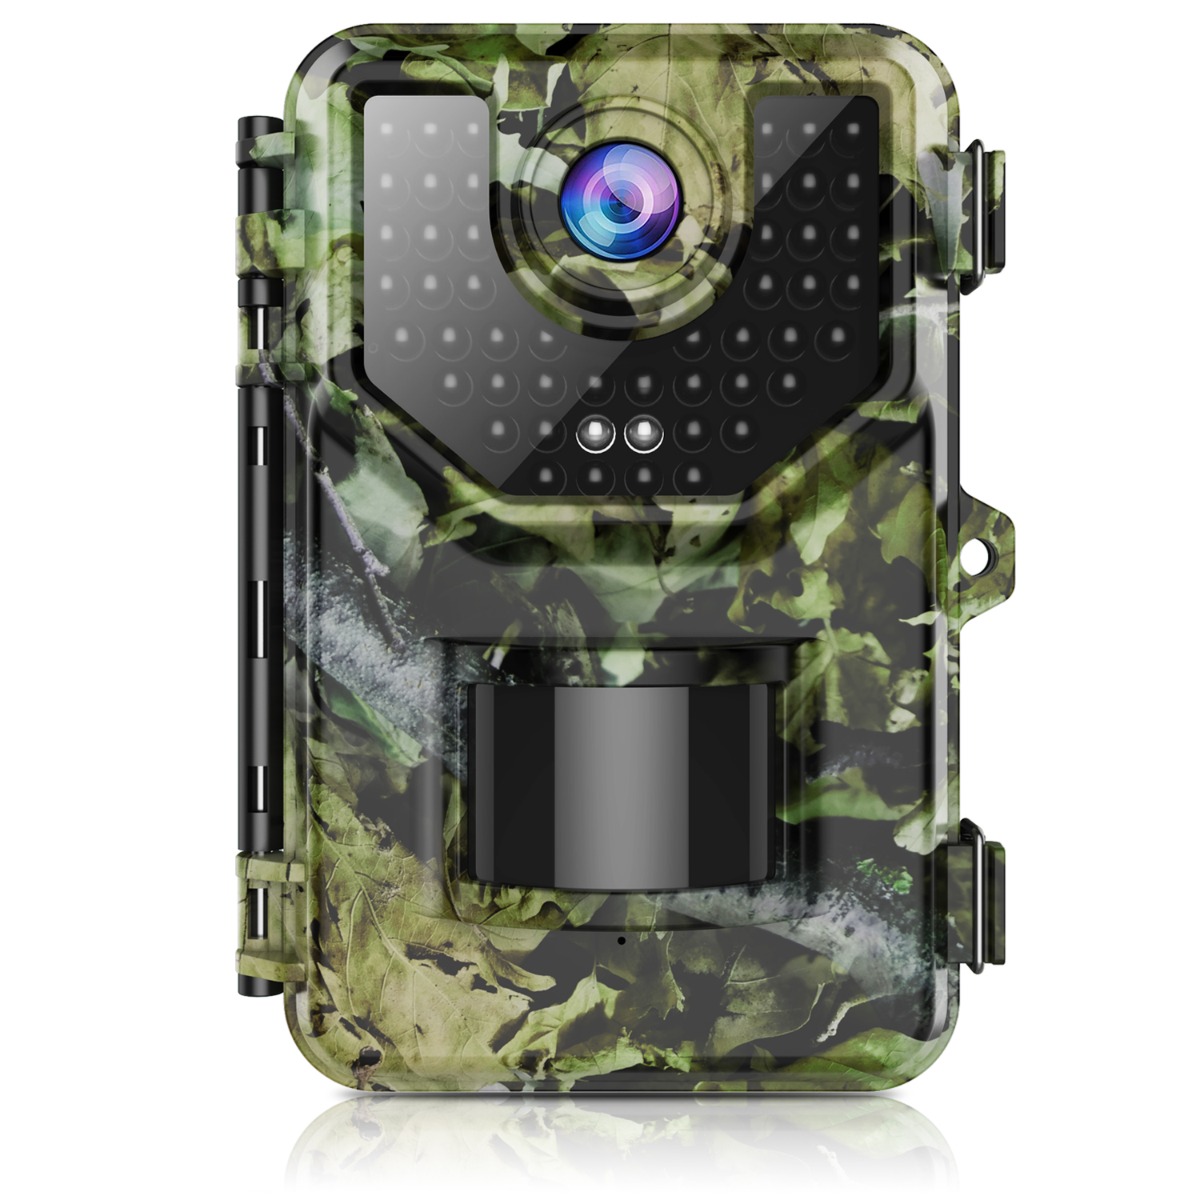 VIKERI Digital Wildlife Camera with 20MP CMOS Sensor